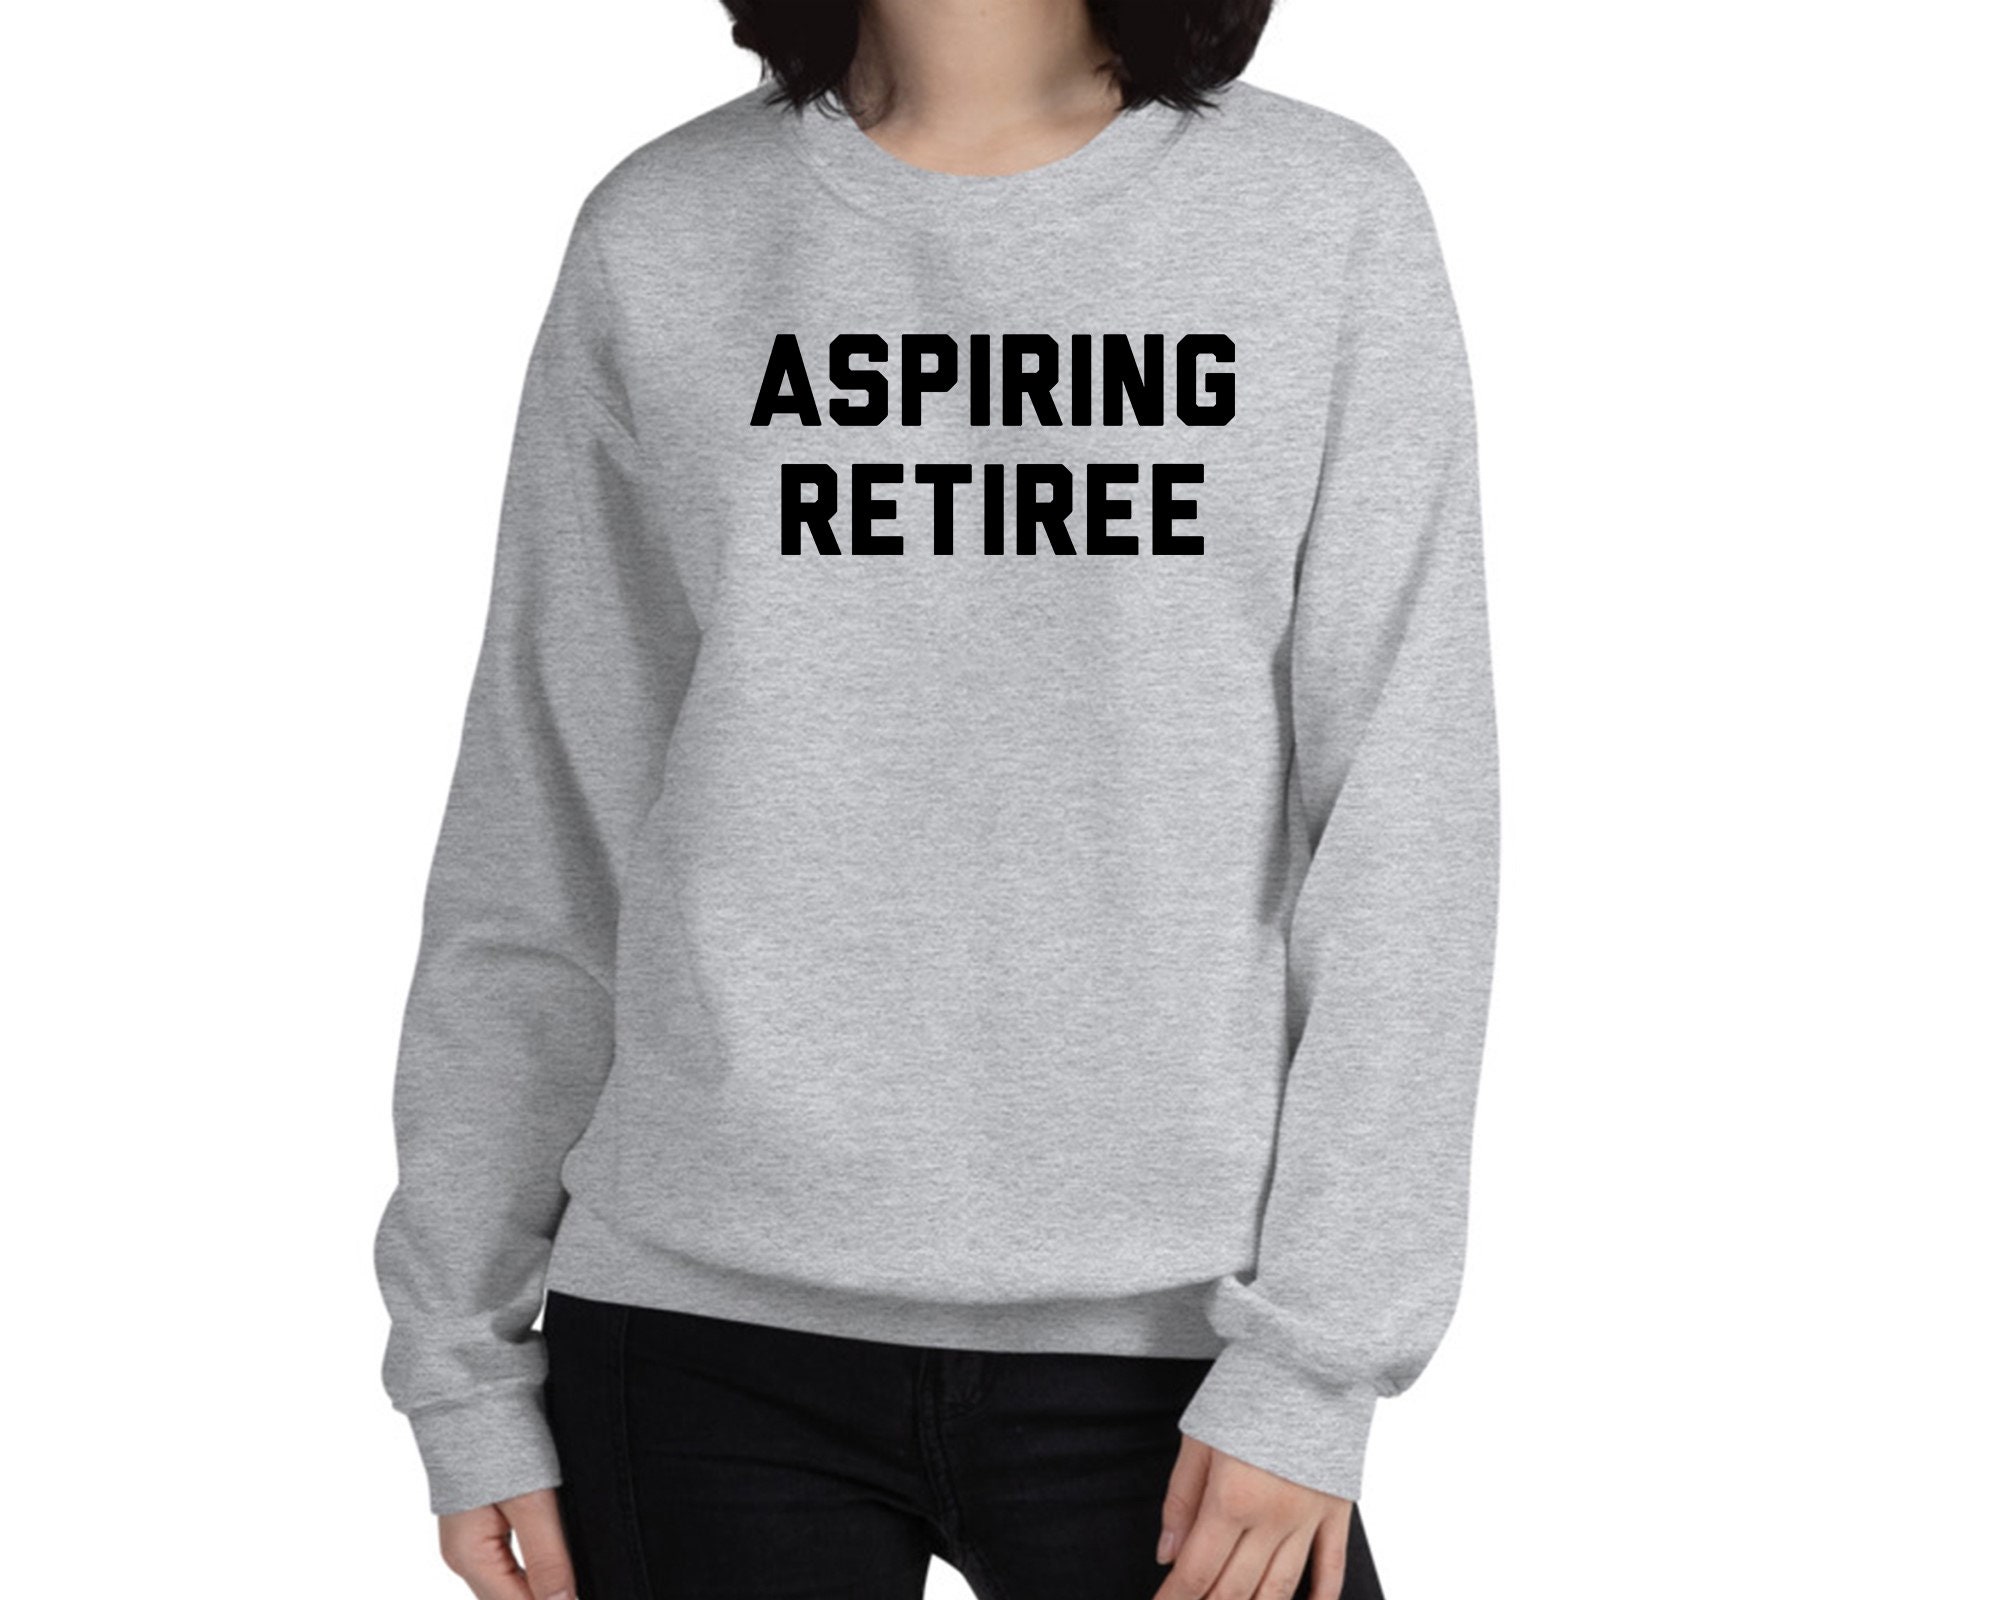 women fashion ladies gifts retirement Sweatshirt sayings funny graphic sweatshirt women gifts slogan shirt Aspiring retiree shirt